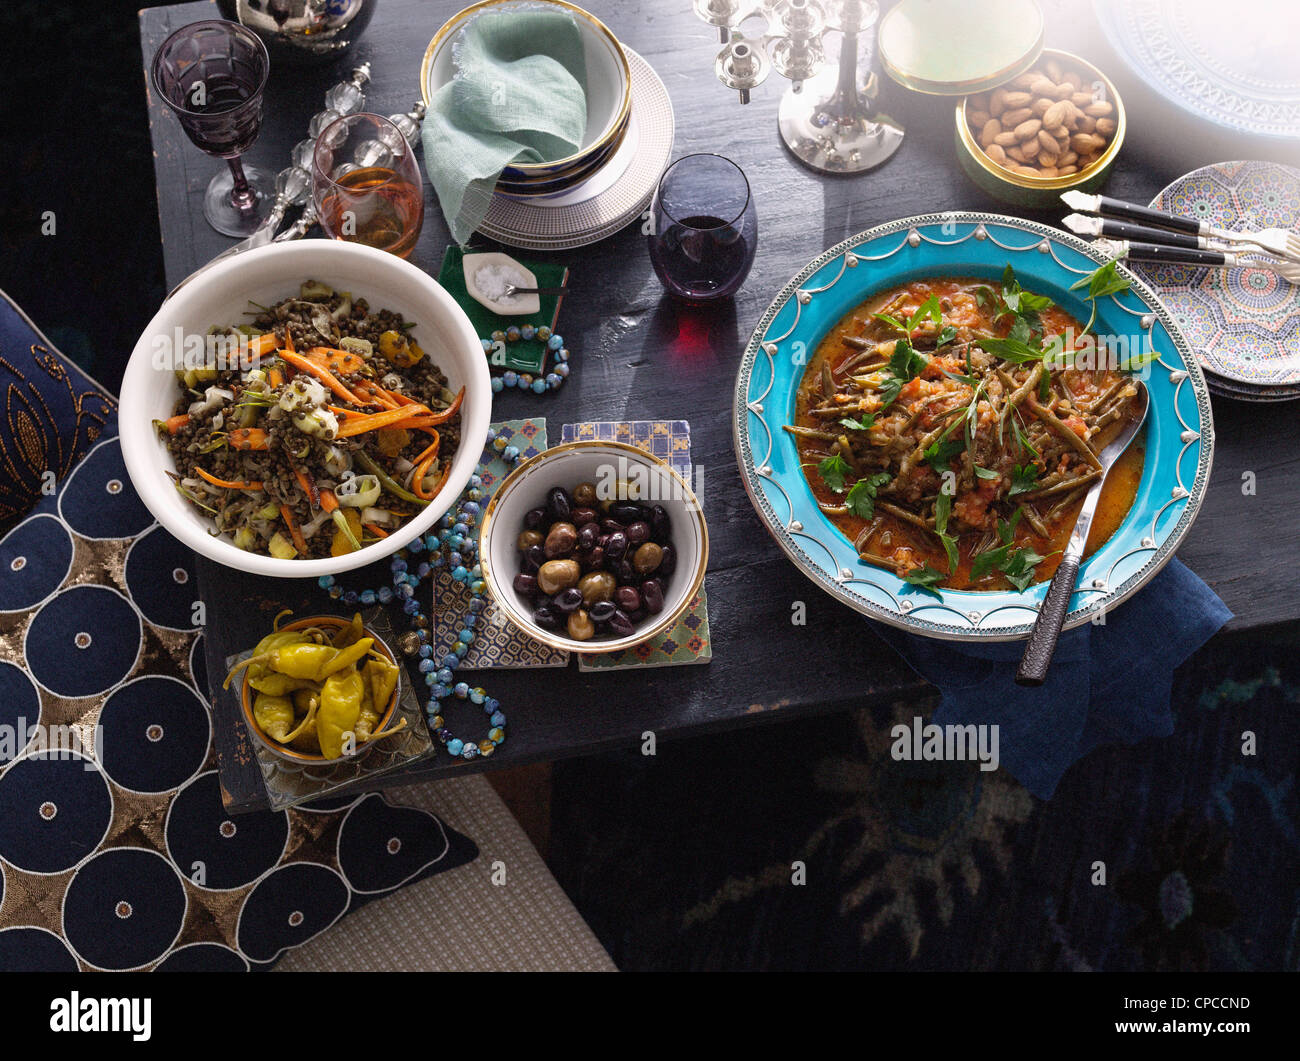 Plates of Turkish food on table Stock Photo